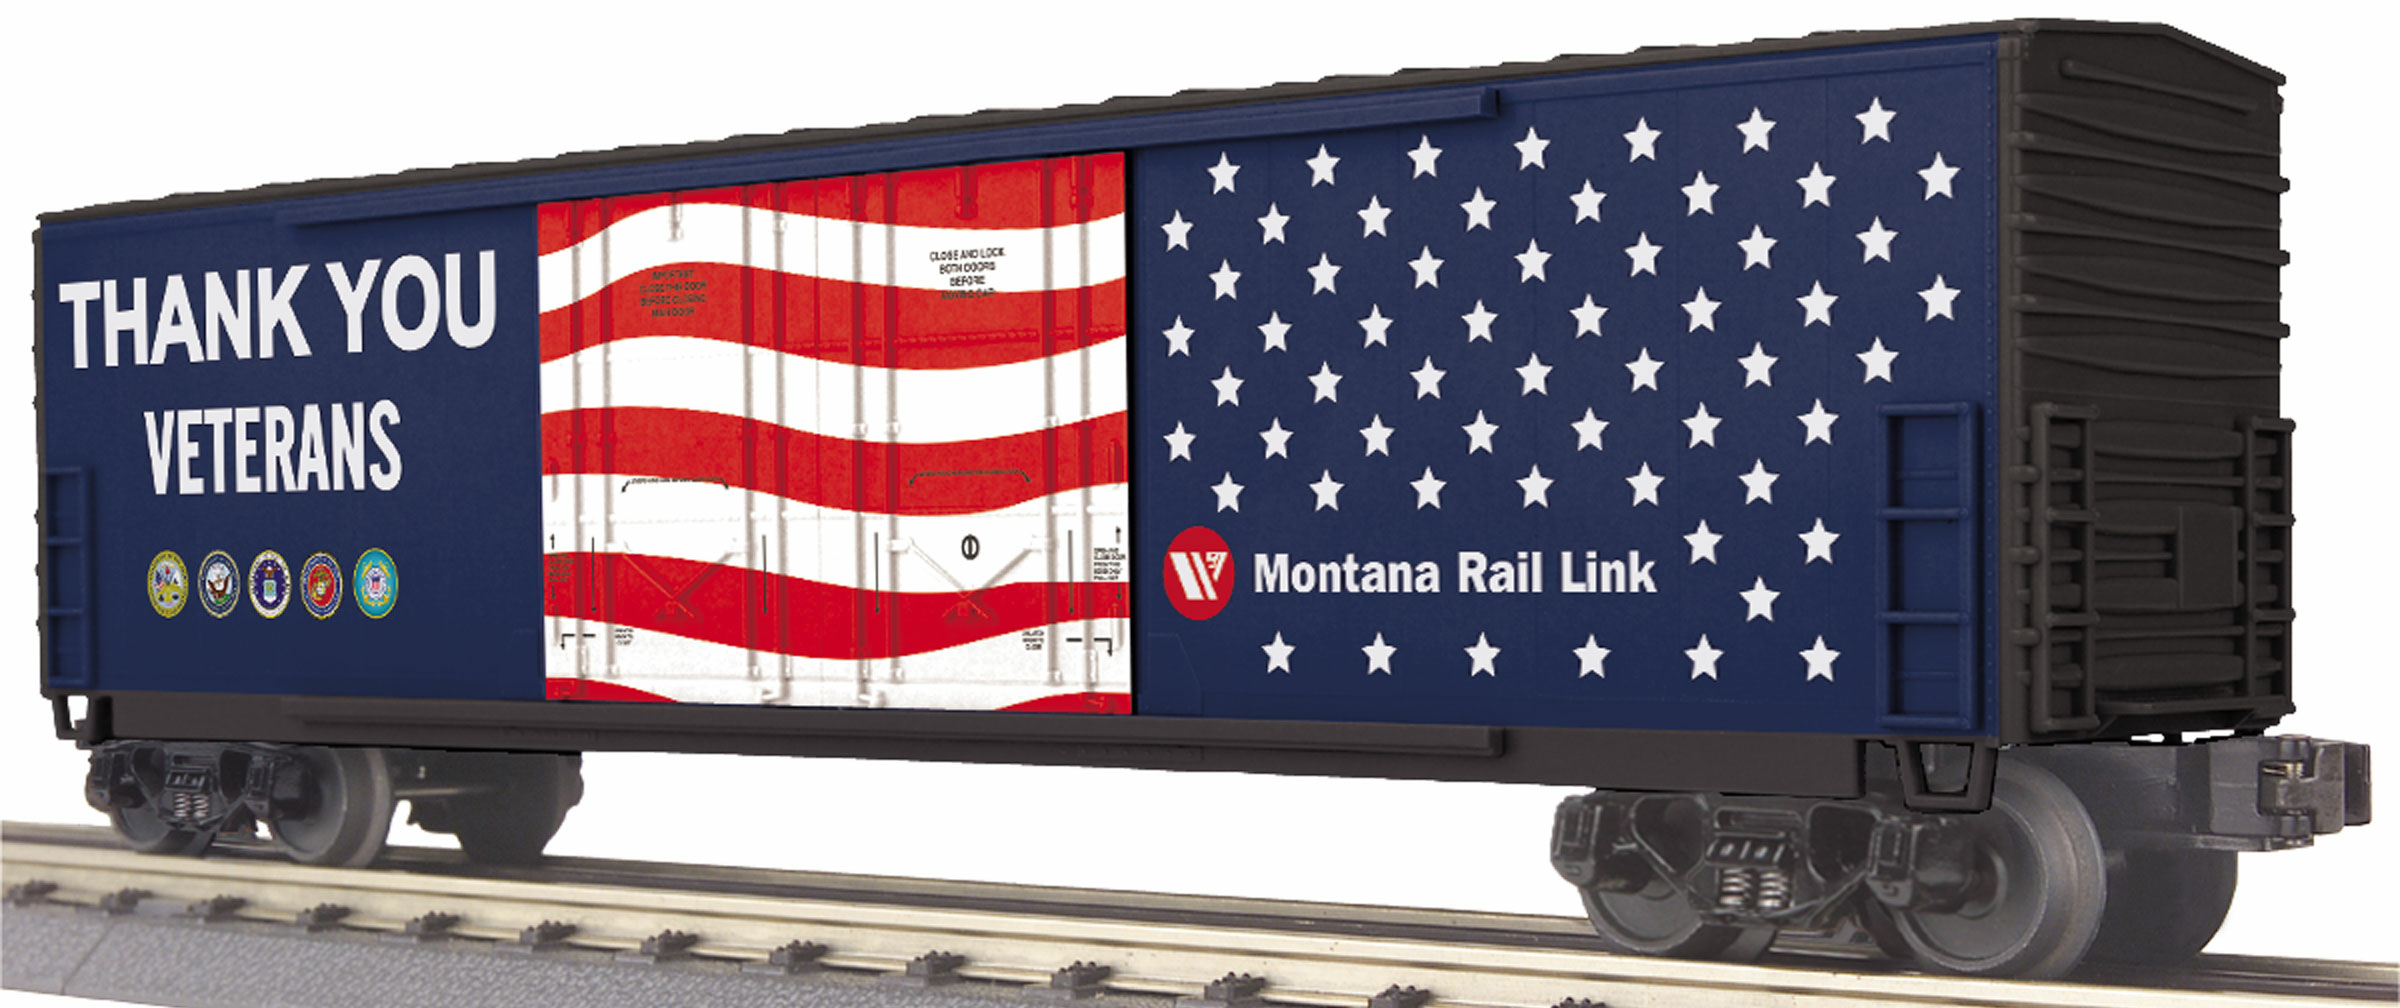 Montana Rail Link (Veterans) 50' Double Door Plugged Boxcar image